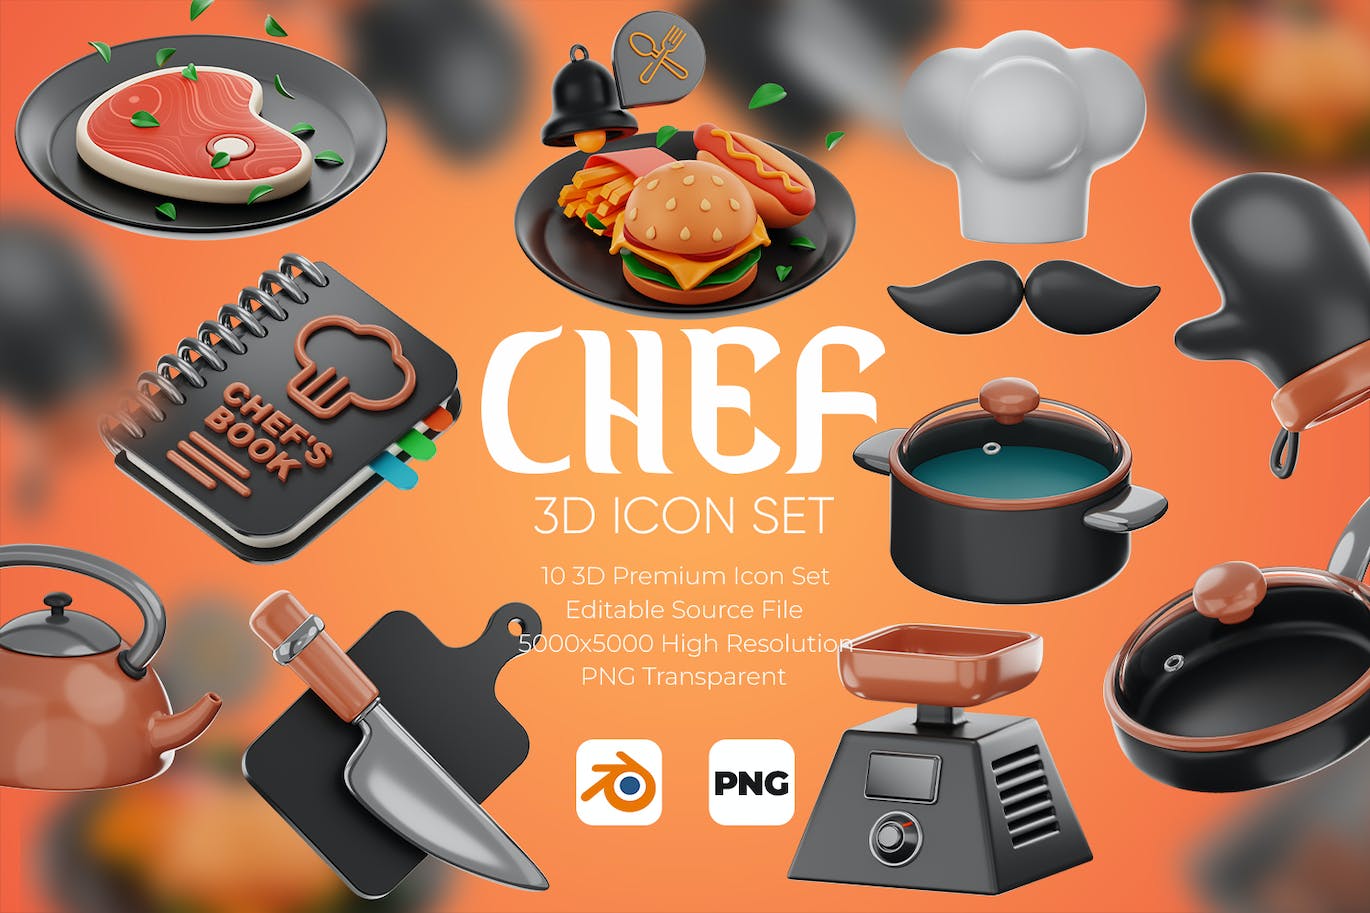 厨师3D图标集 Chef 3D Icon Set 图标素材 第1张